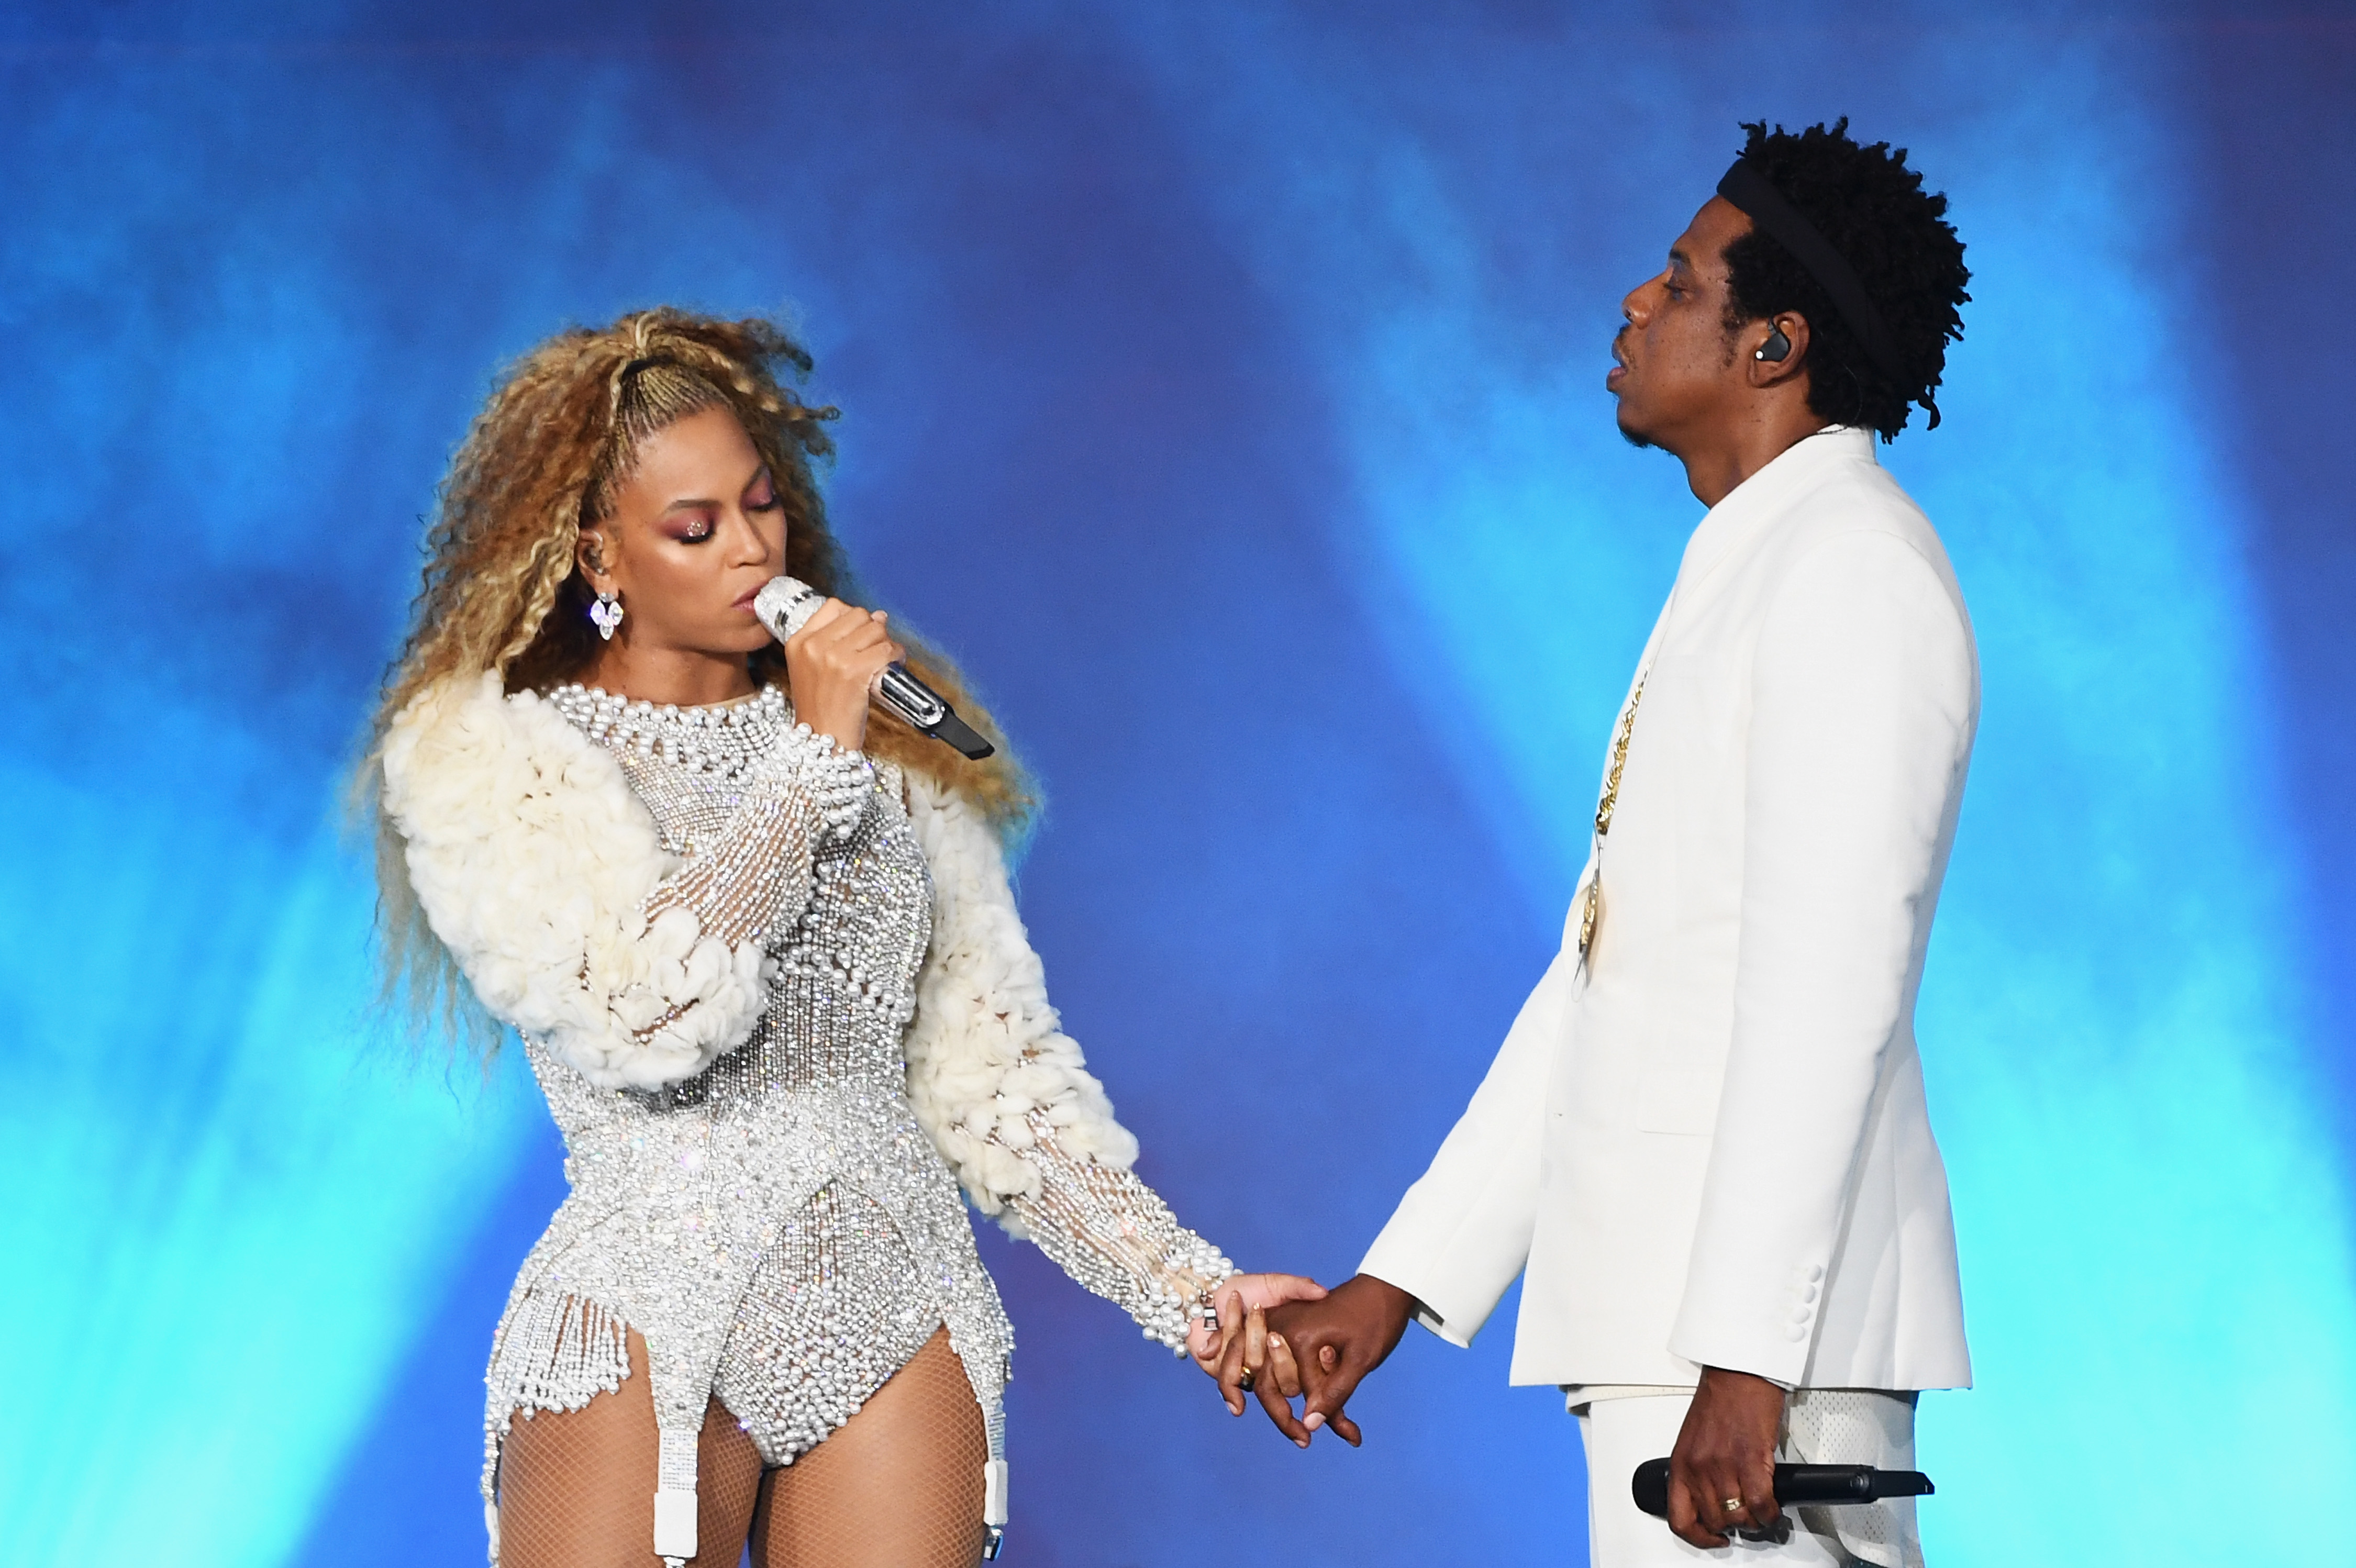 Random Fan Runs Onstage During Beyonce And Jay-Z “OTR II” Stop in Atlanta